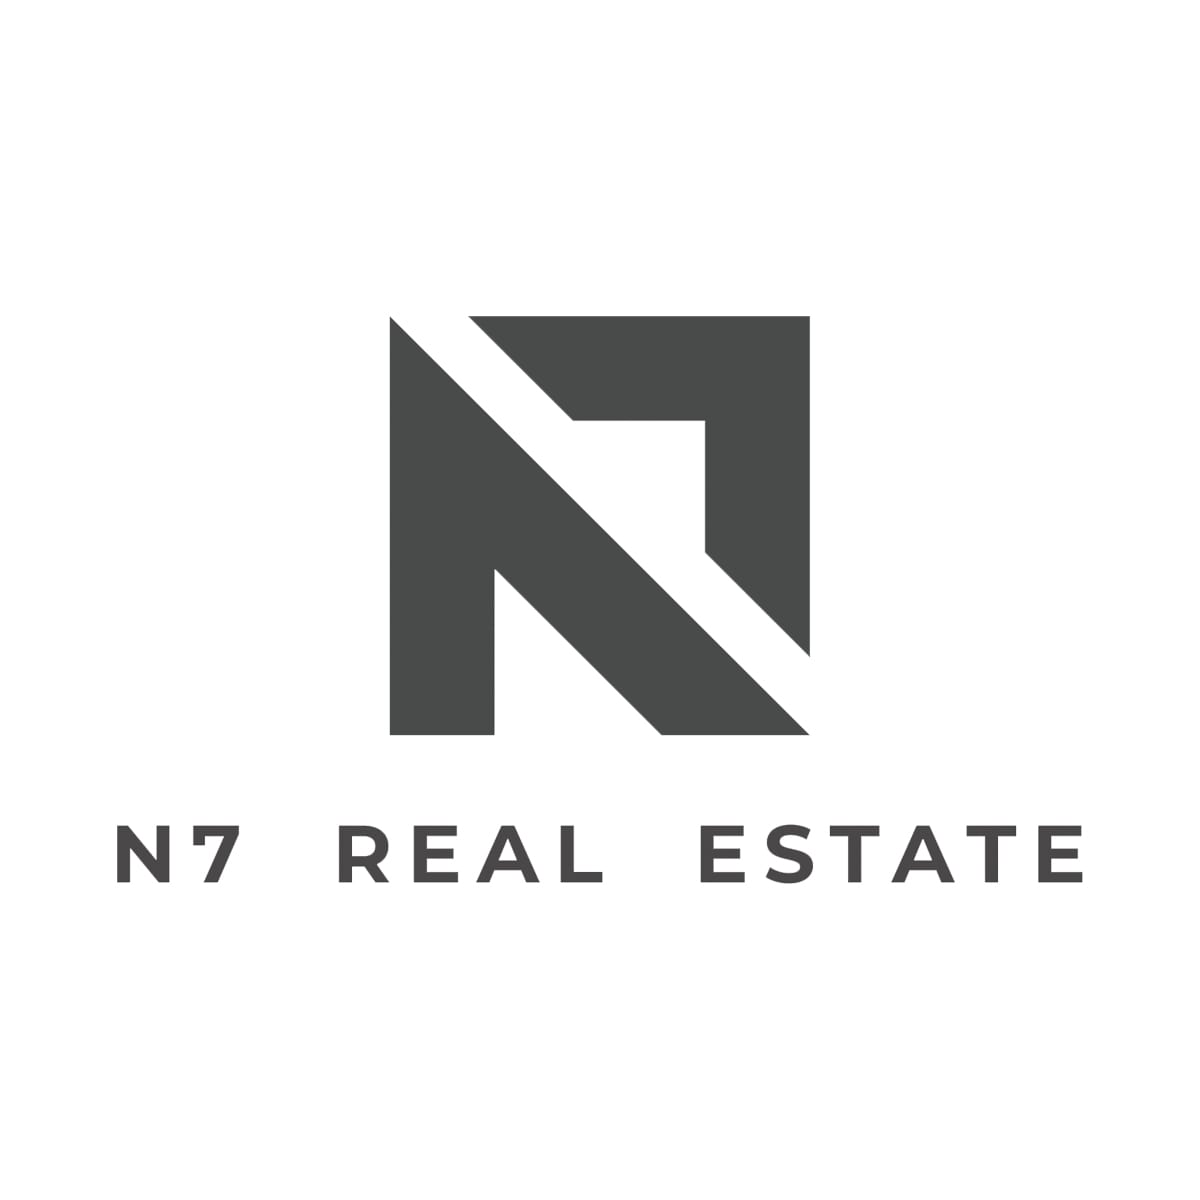 #1 Real Estate Agent / Agency Caroline Springs | N7 Real Estate - Buy or Sell Property